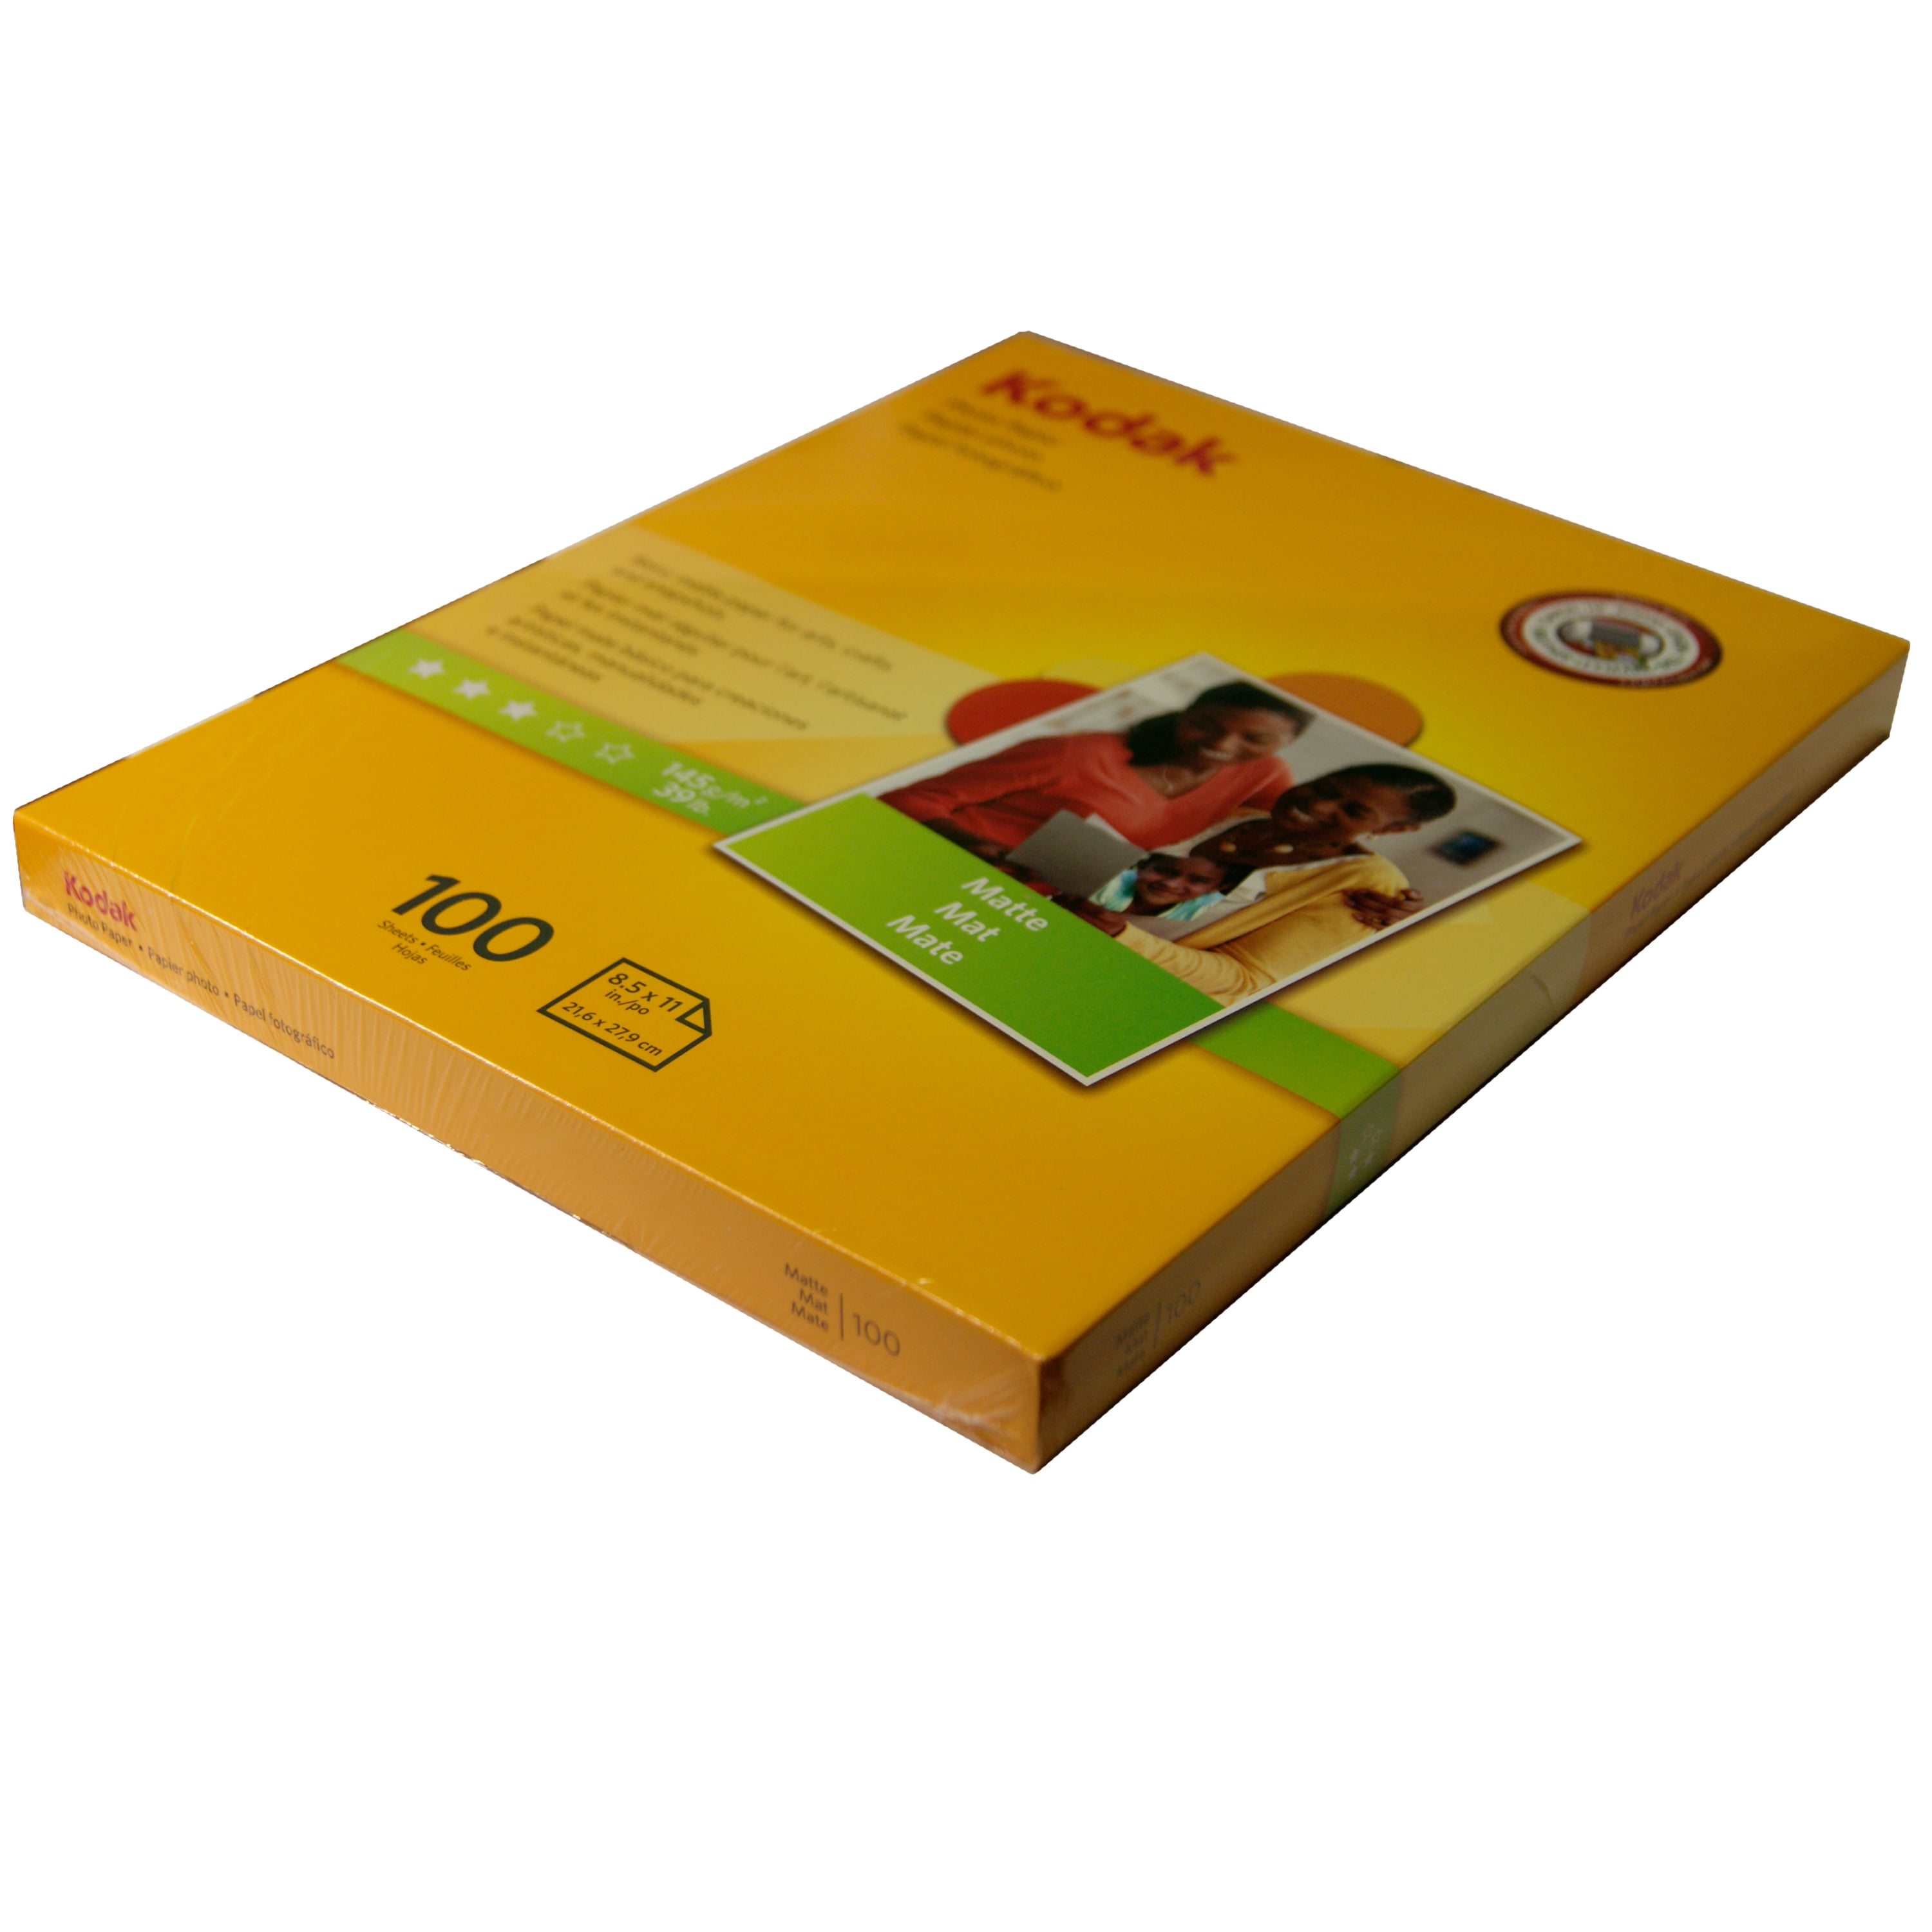 Kodak photo paper 8.5 x 11 glossy, 2-Pak bundle, 200 count total, 48 lb -  180 g/m (241163)…